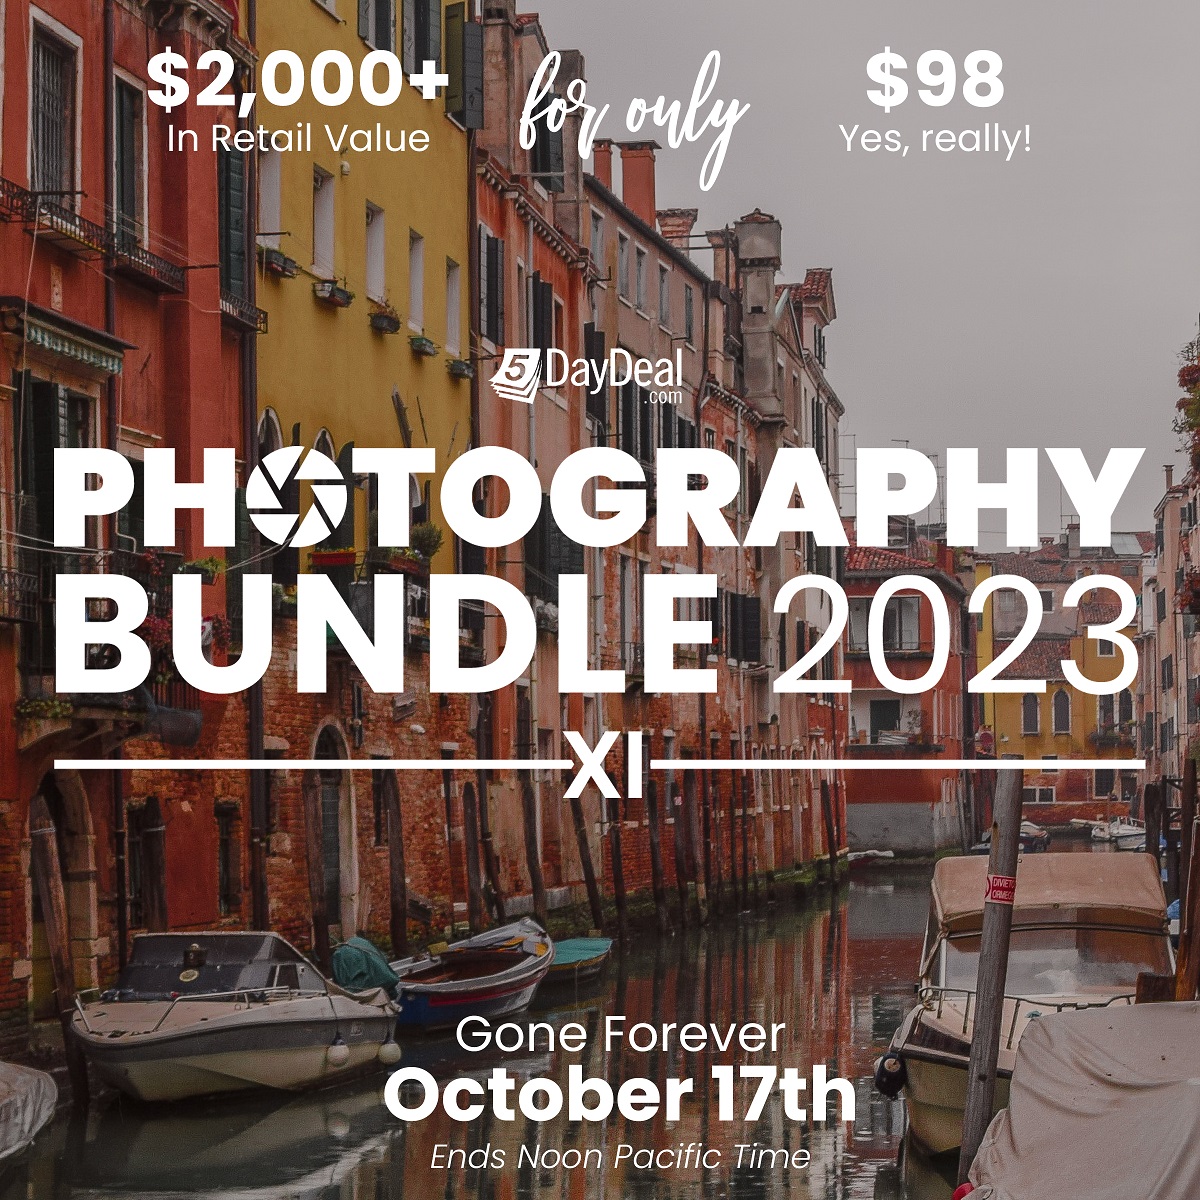 Photography bundle october 2023